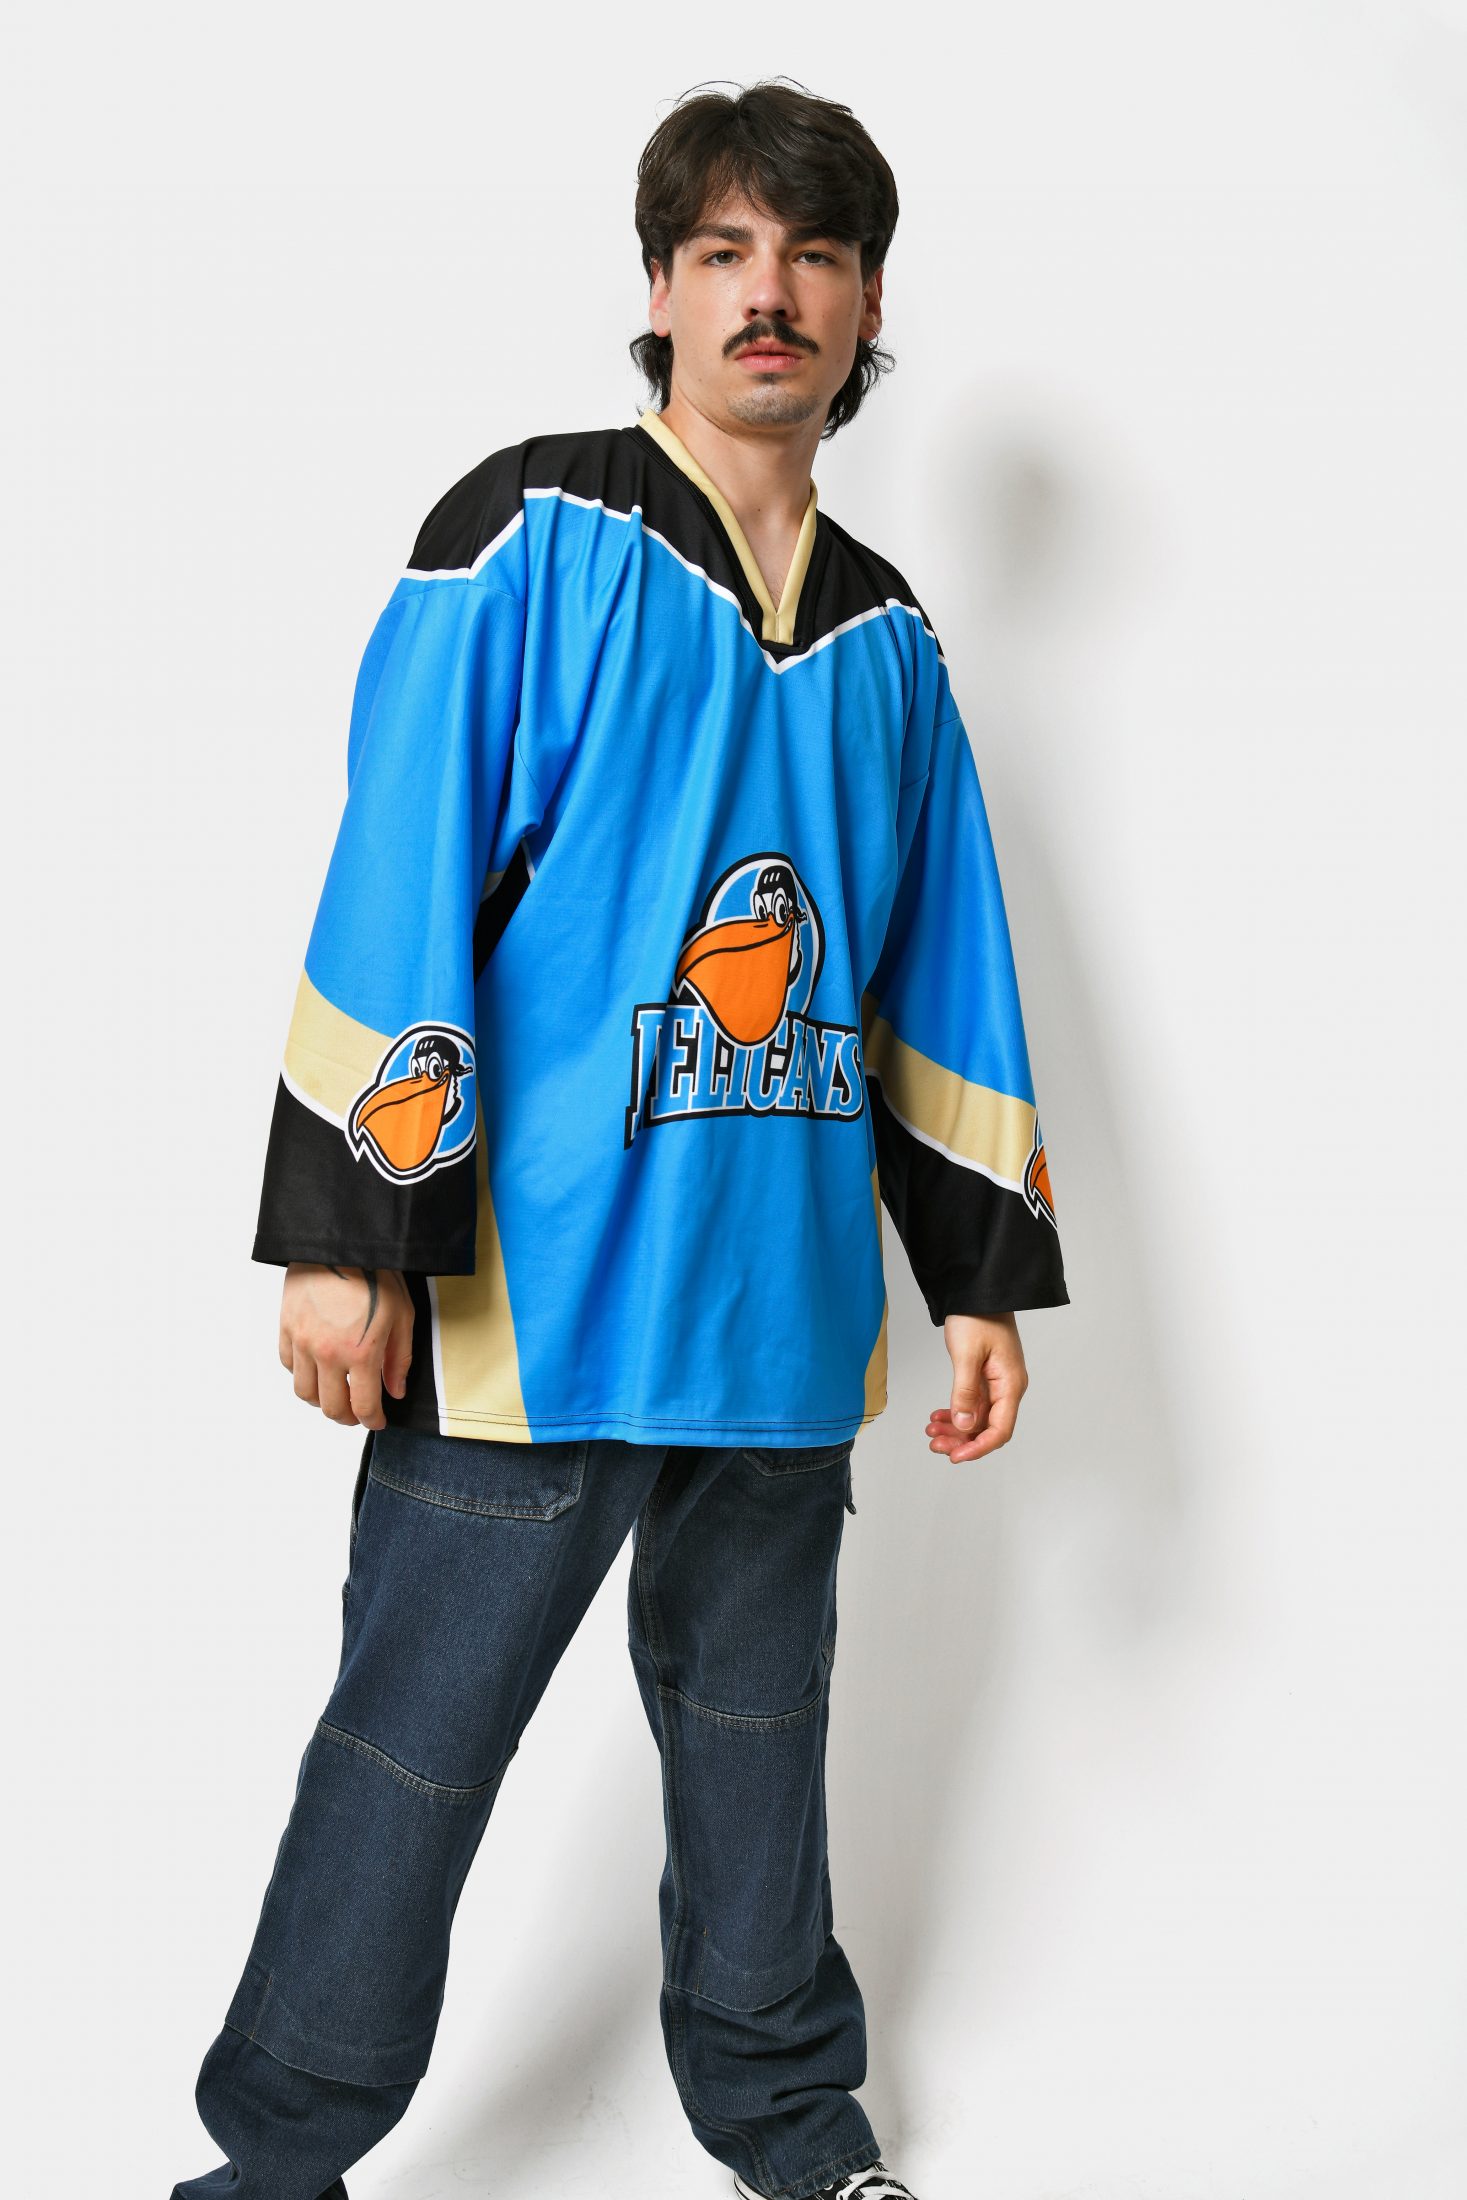 pelicans hockey jersey